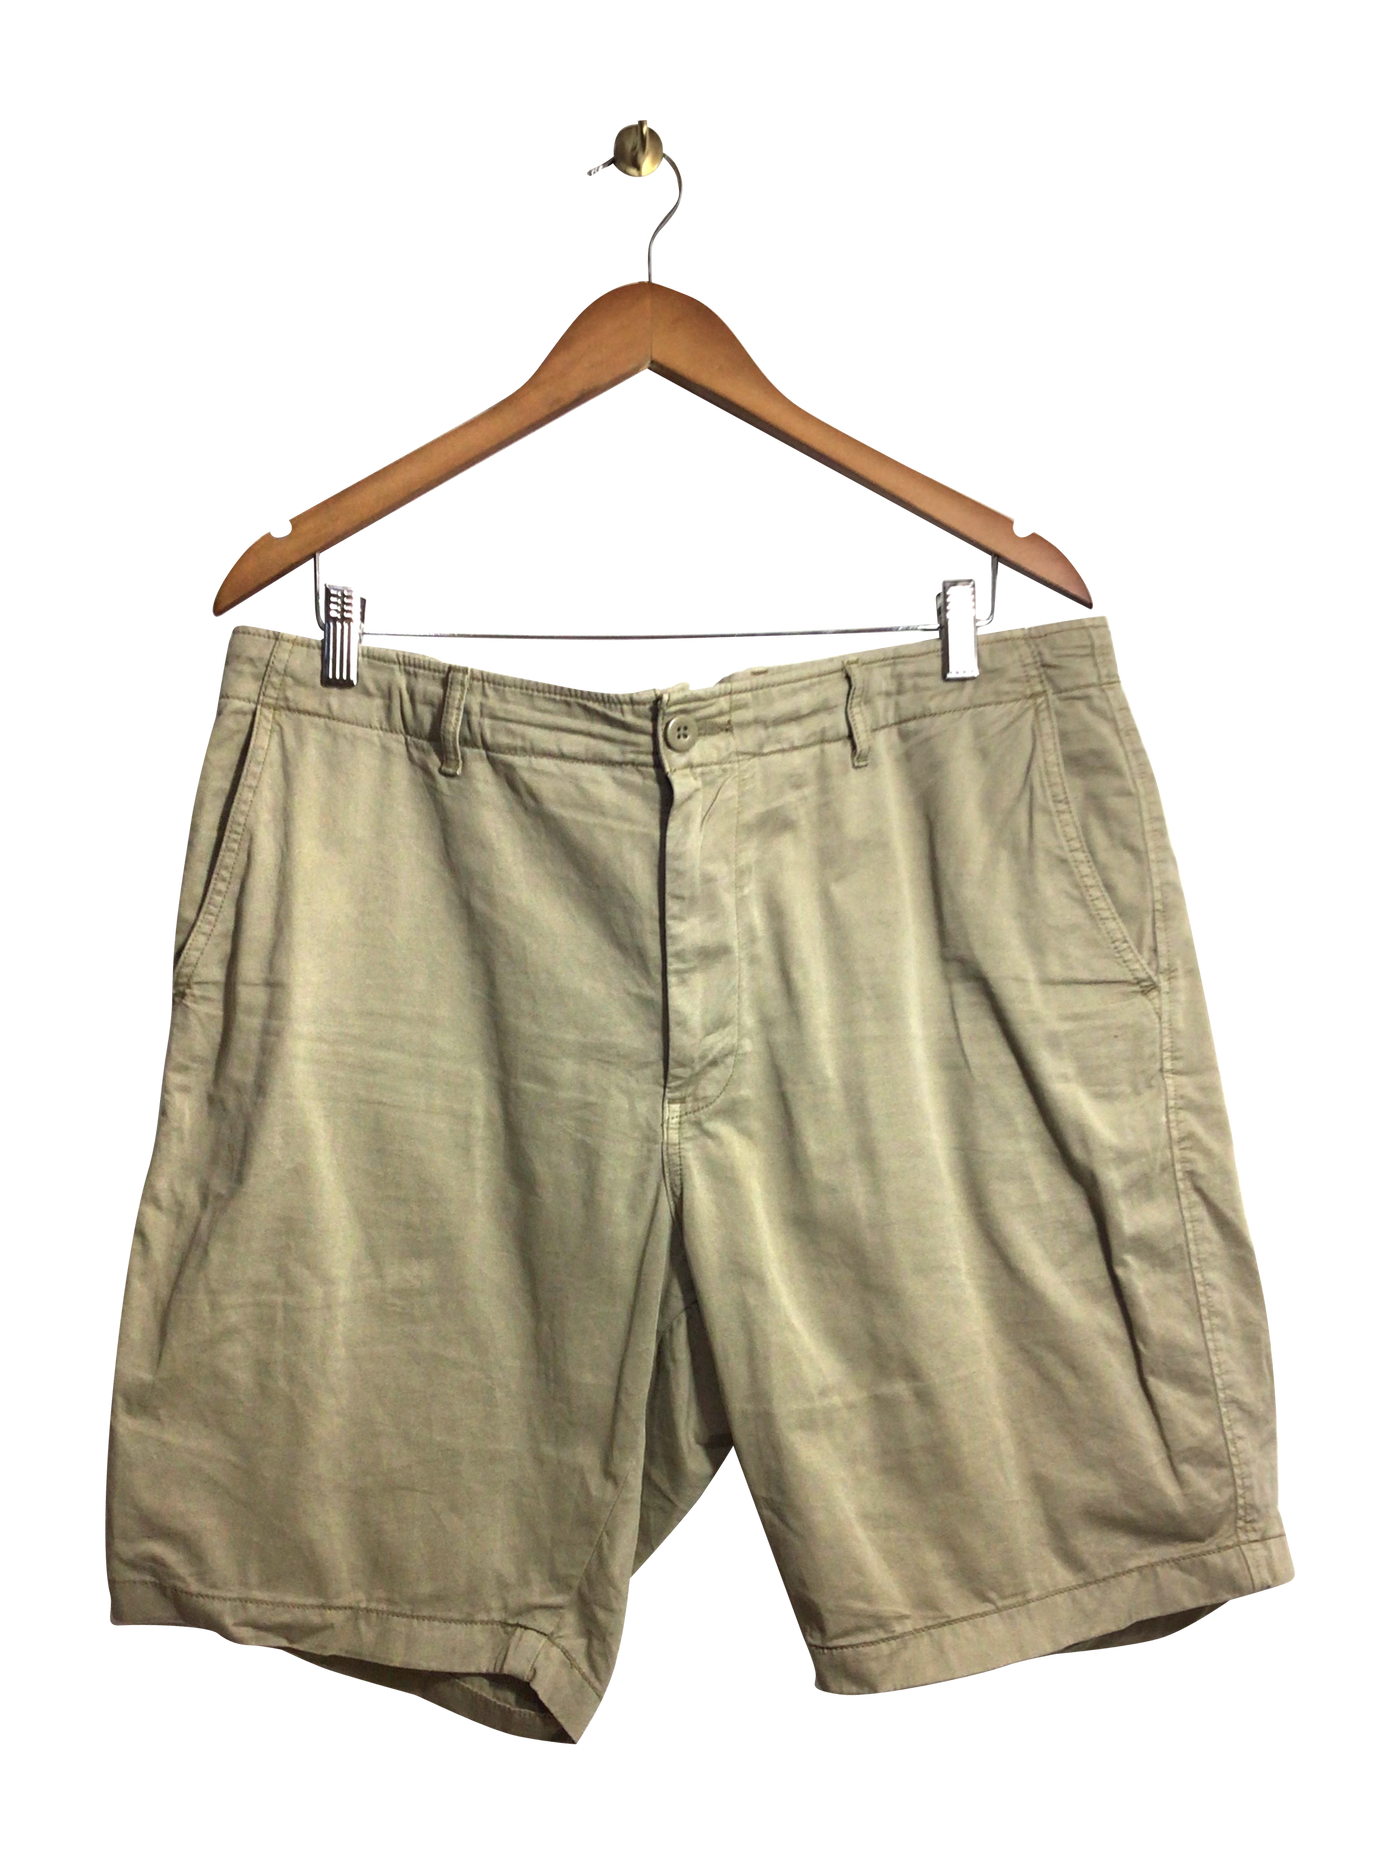 UNIQLO Men Classic Shorts Regular fit in Beige - Size L | 12.99 $ KOOP